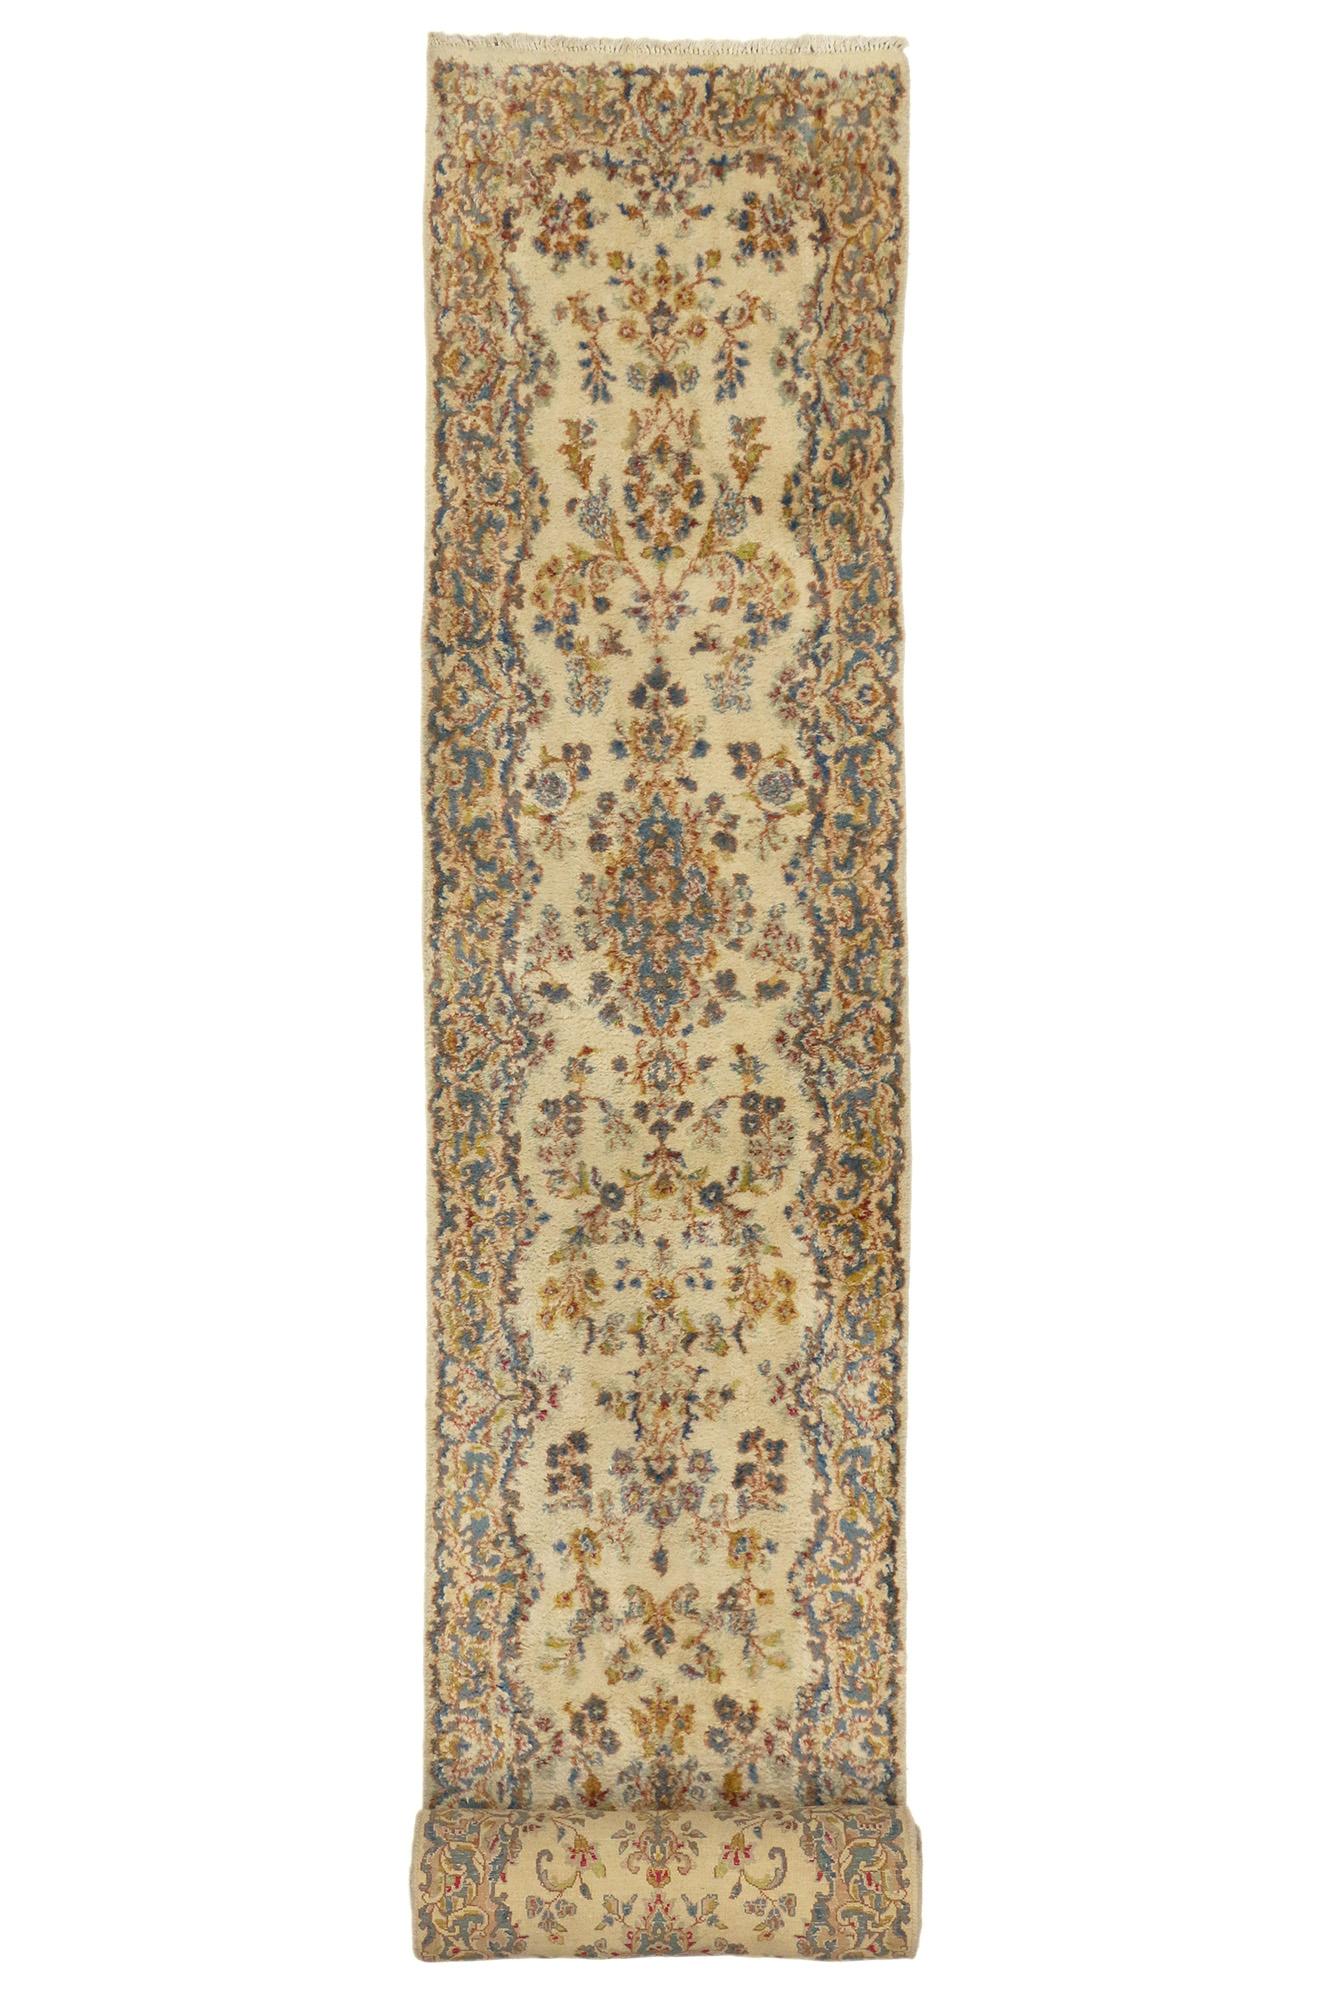 20th Century Vintage Persian Kerman Rug Carpet Runner, 02'06 x 19'03 For Sale